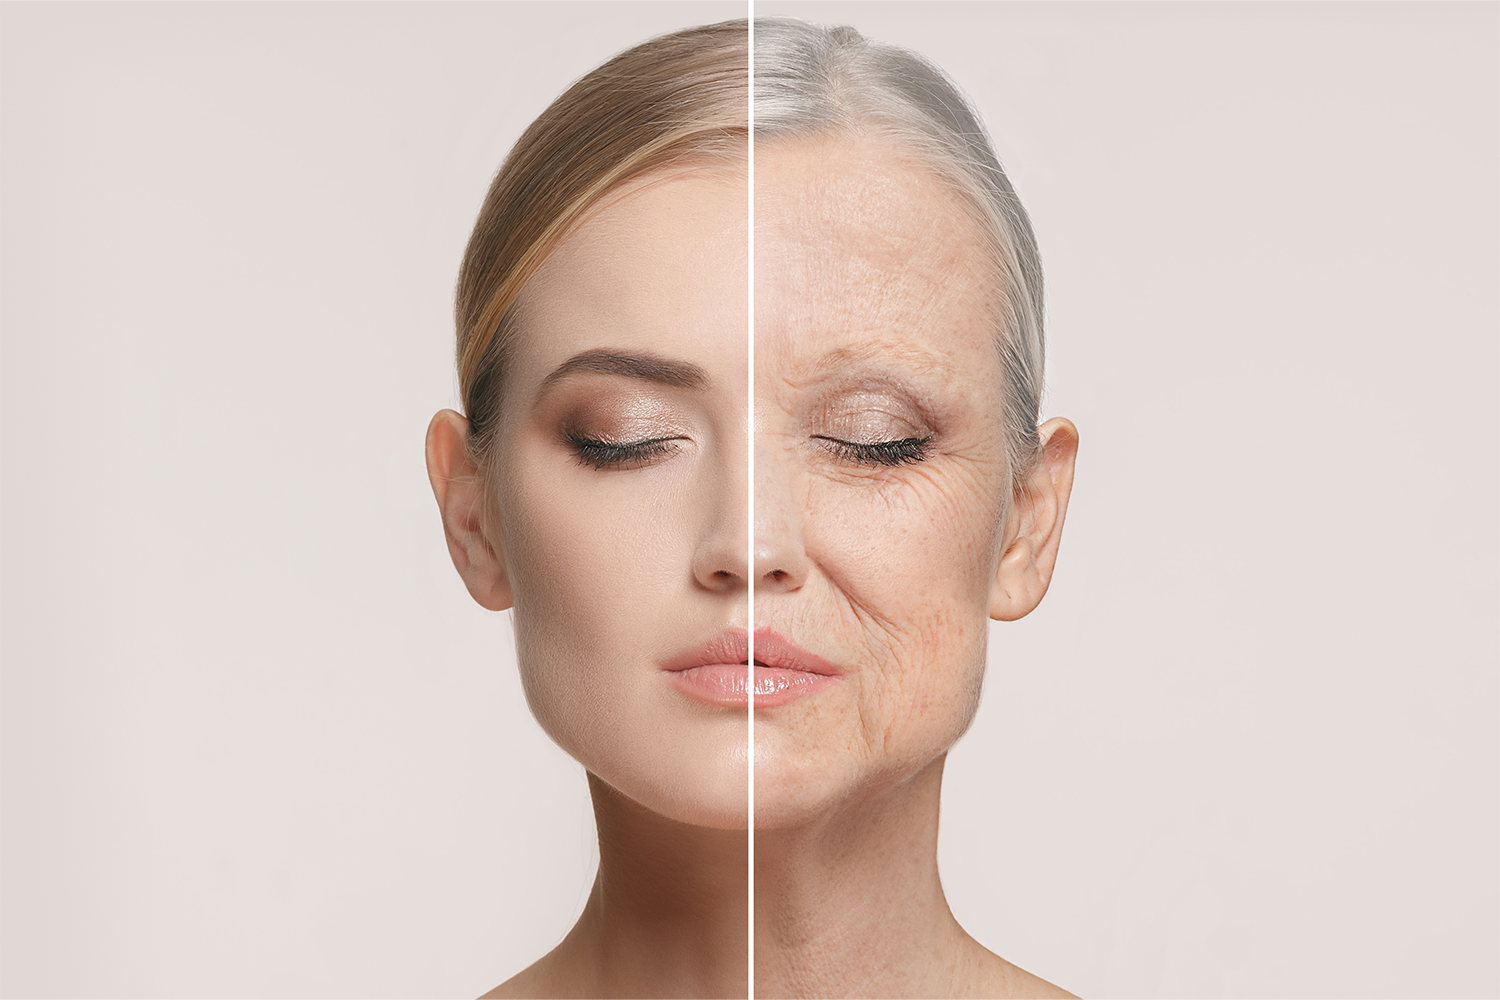 10 Best Skin Care Tips for Aging Skin